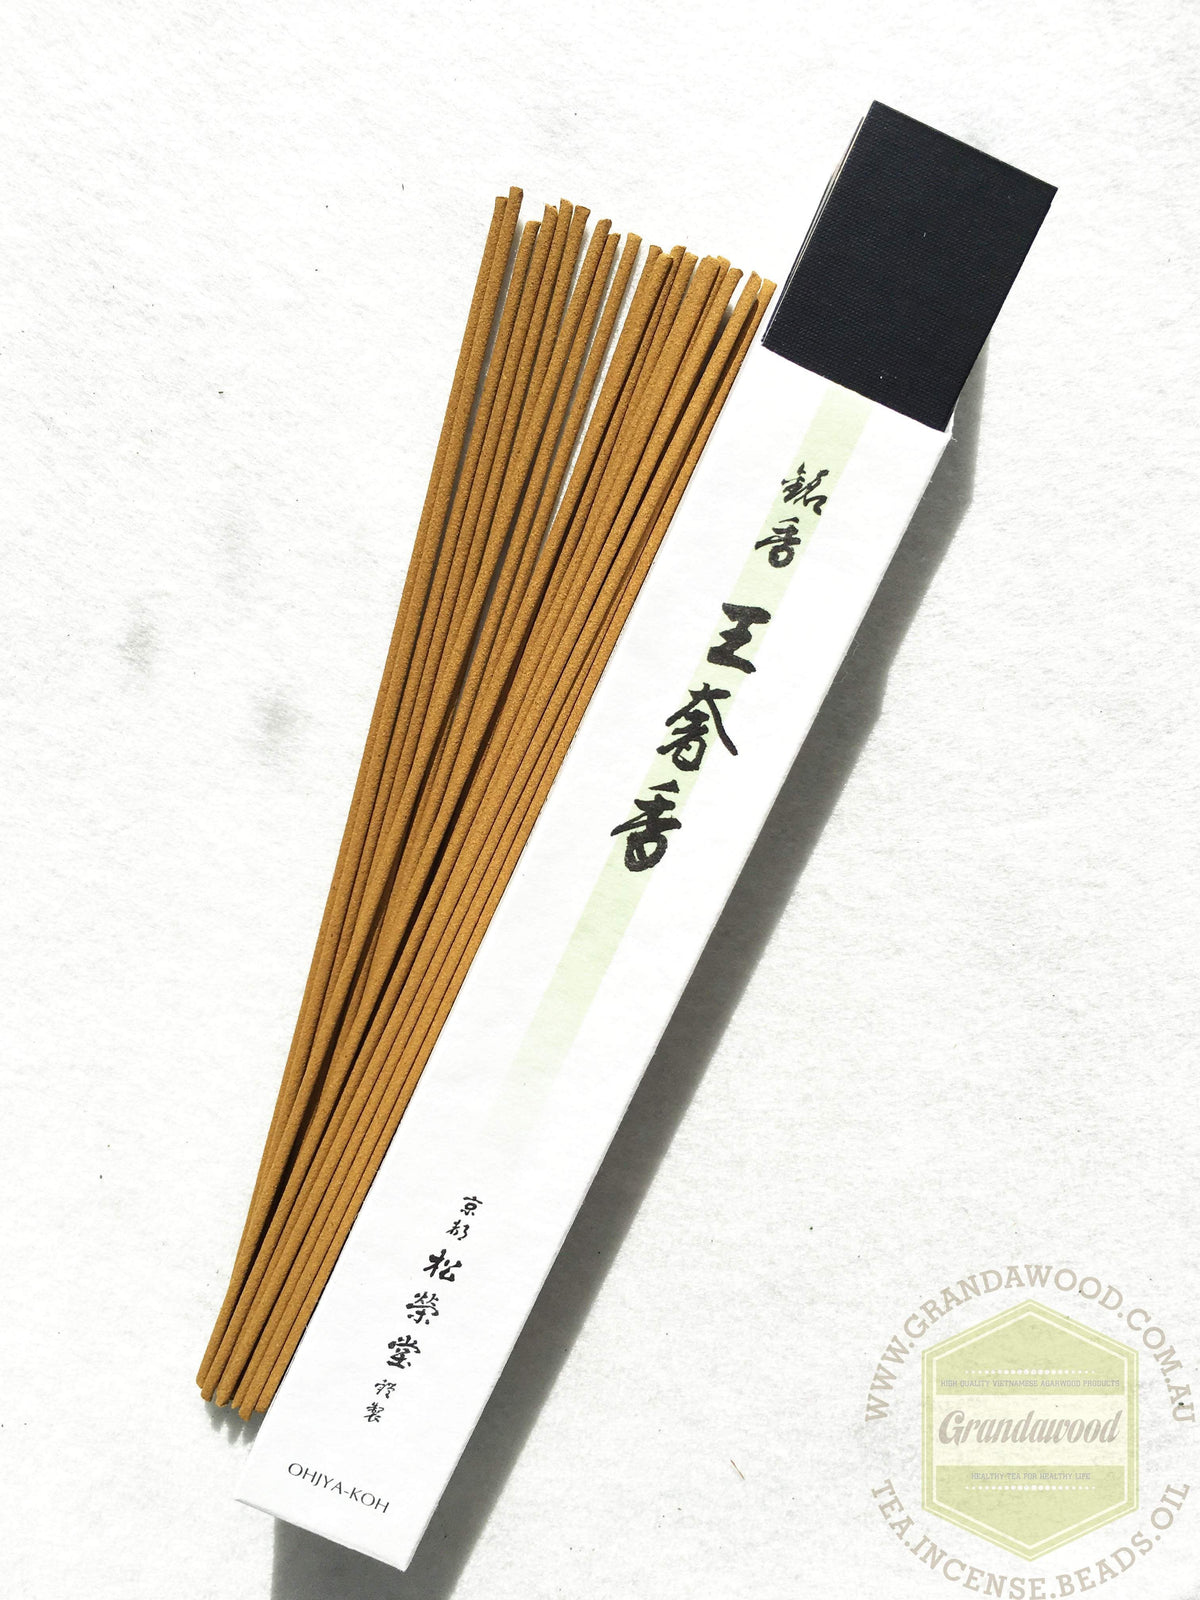 Shoyeido Premium Sandalwood Incense: King&#39;s Aroma/ Ohjya-koh -